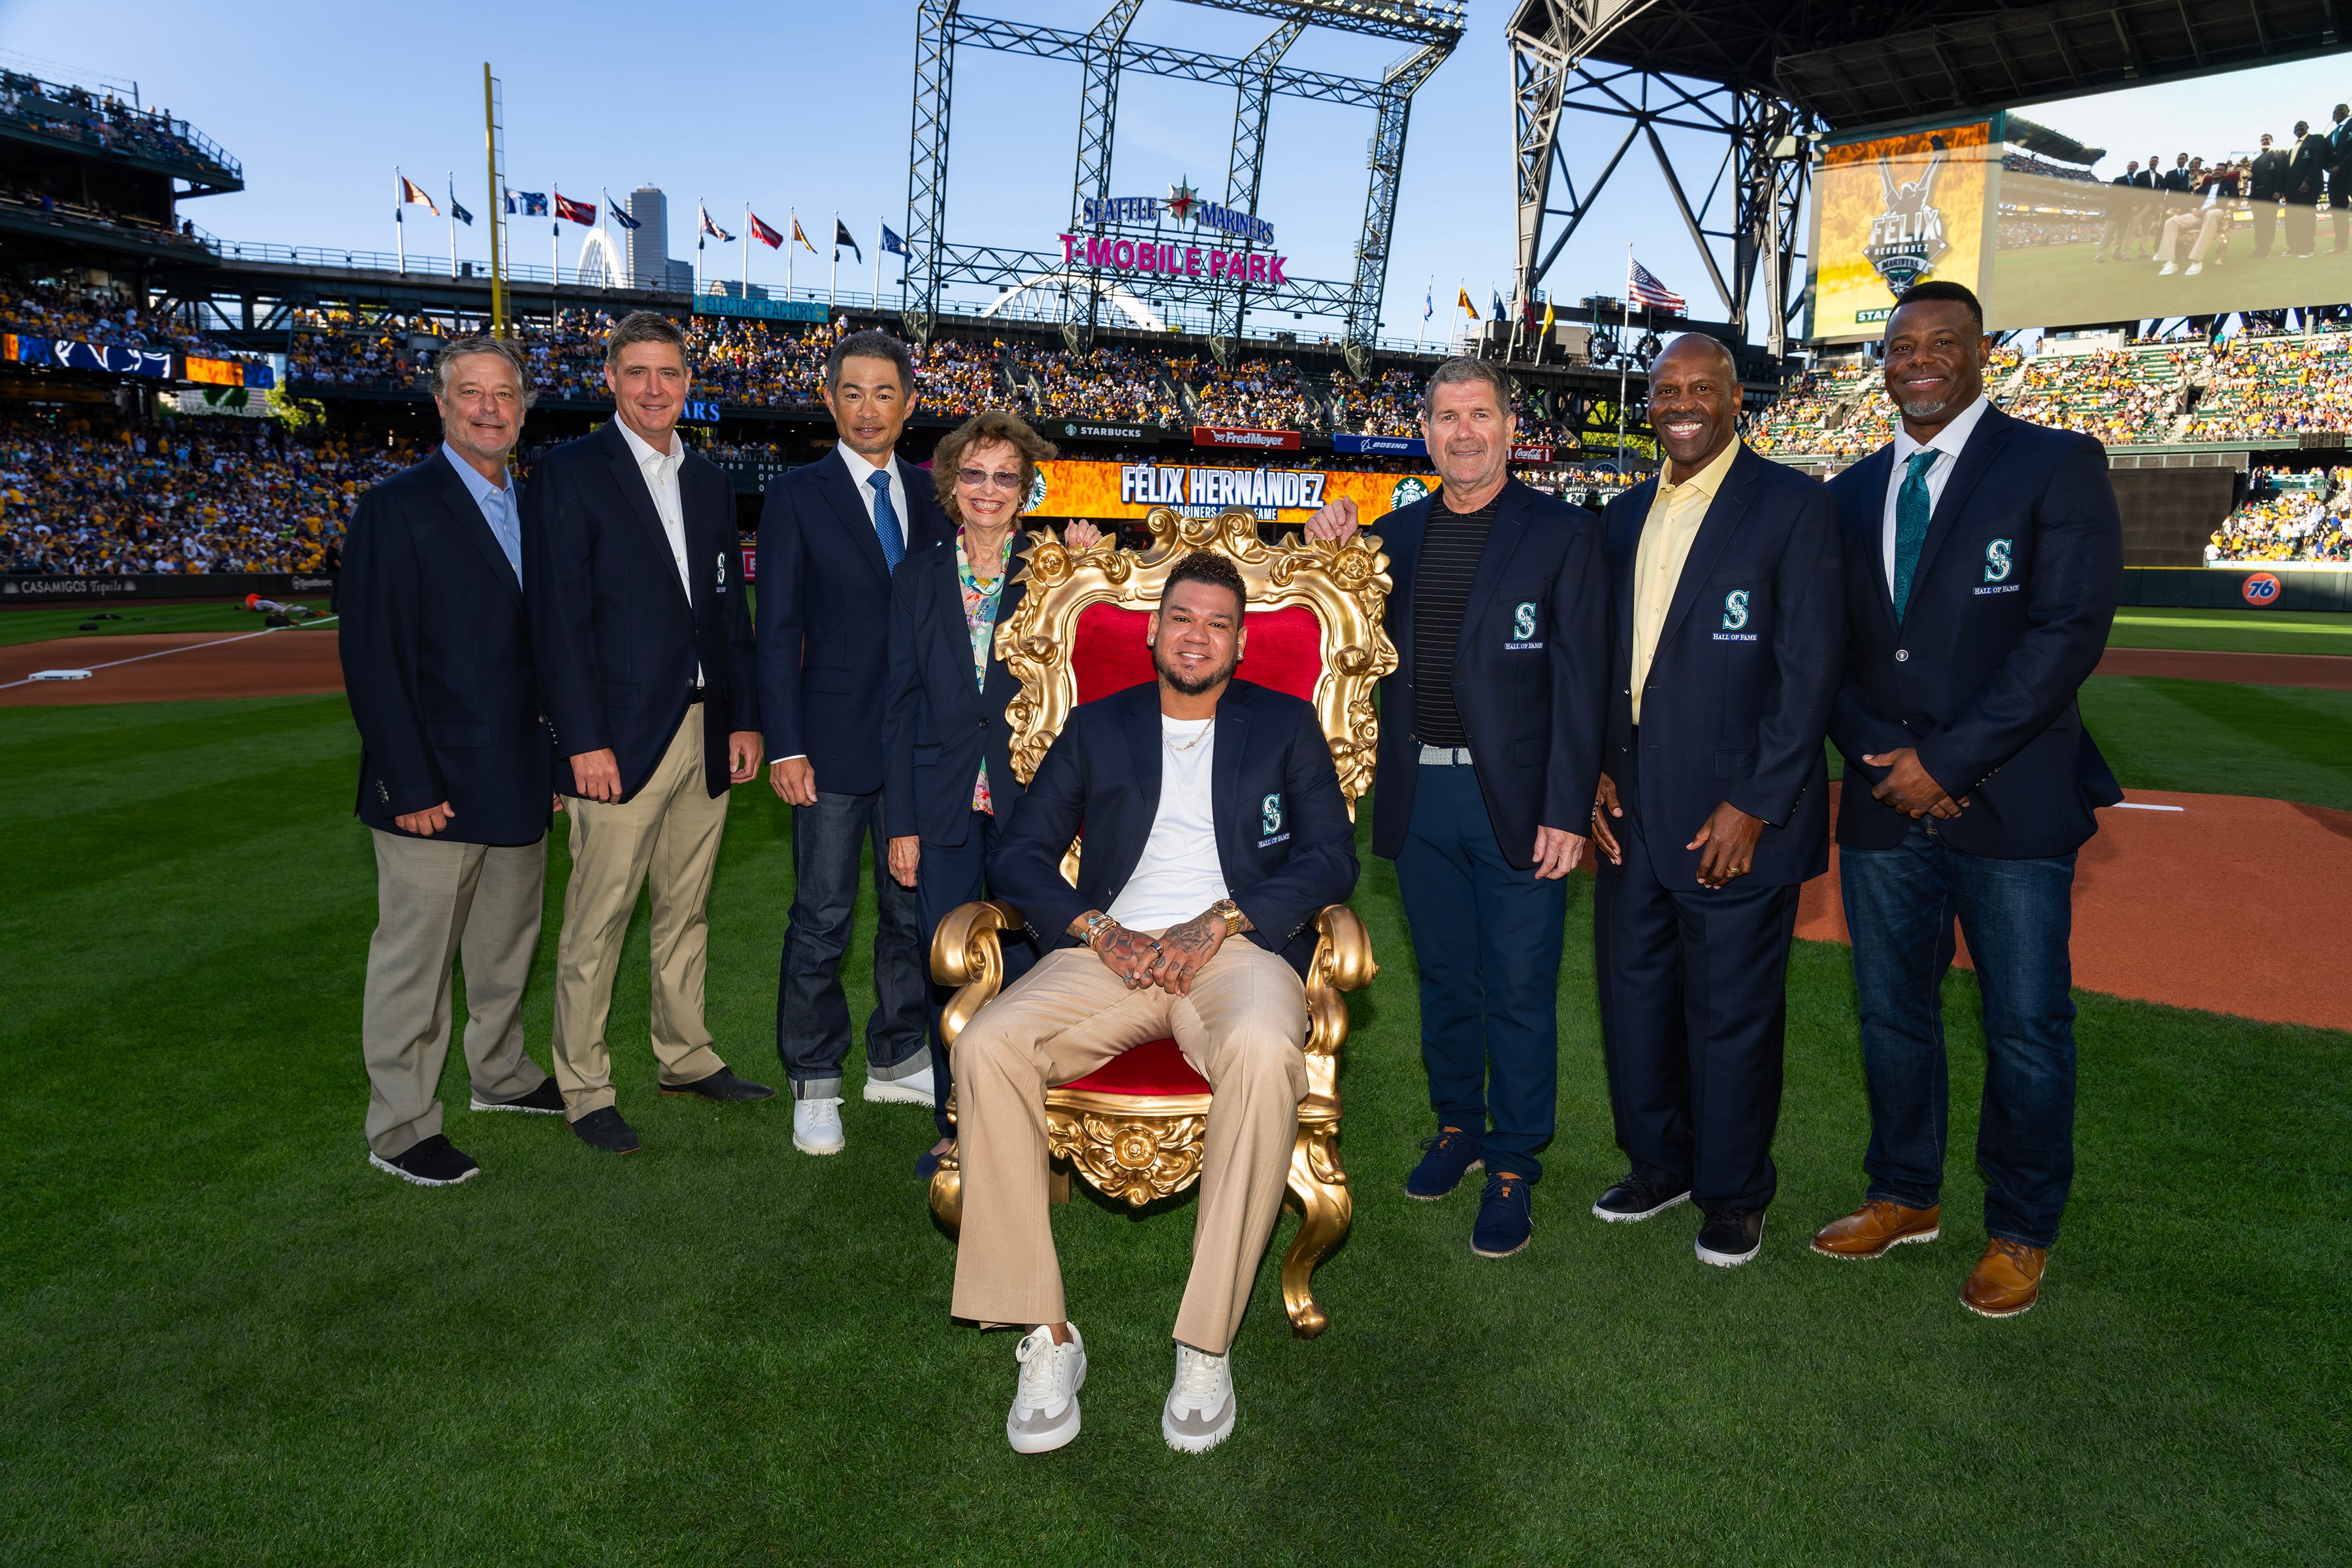 [Photo] Felix Hernandez, Surrounded By K's (via A's Broadcast) : r/baseball